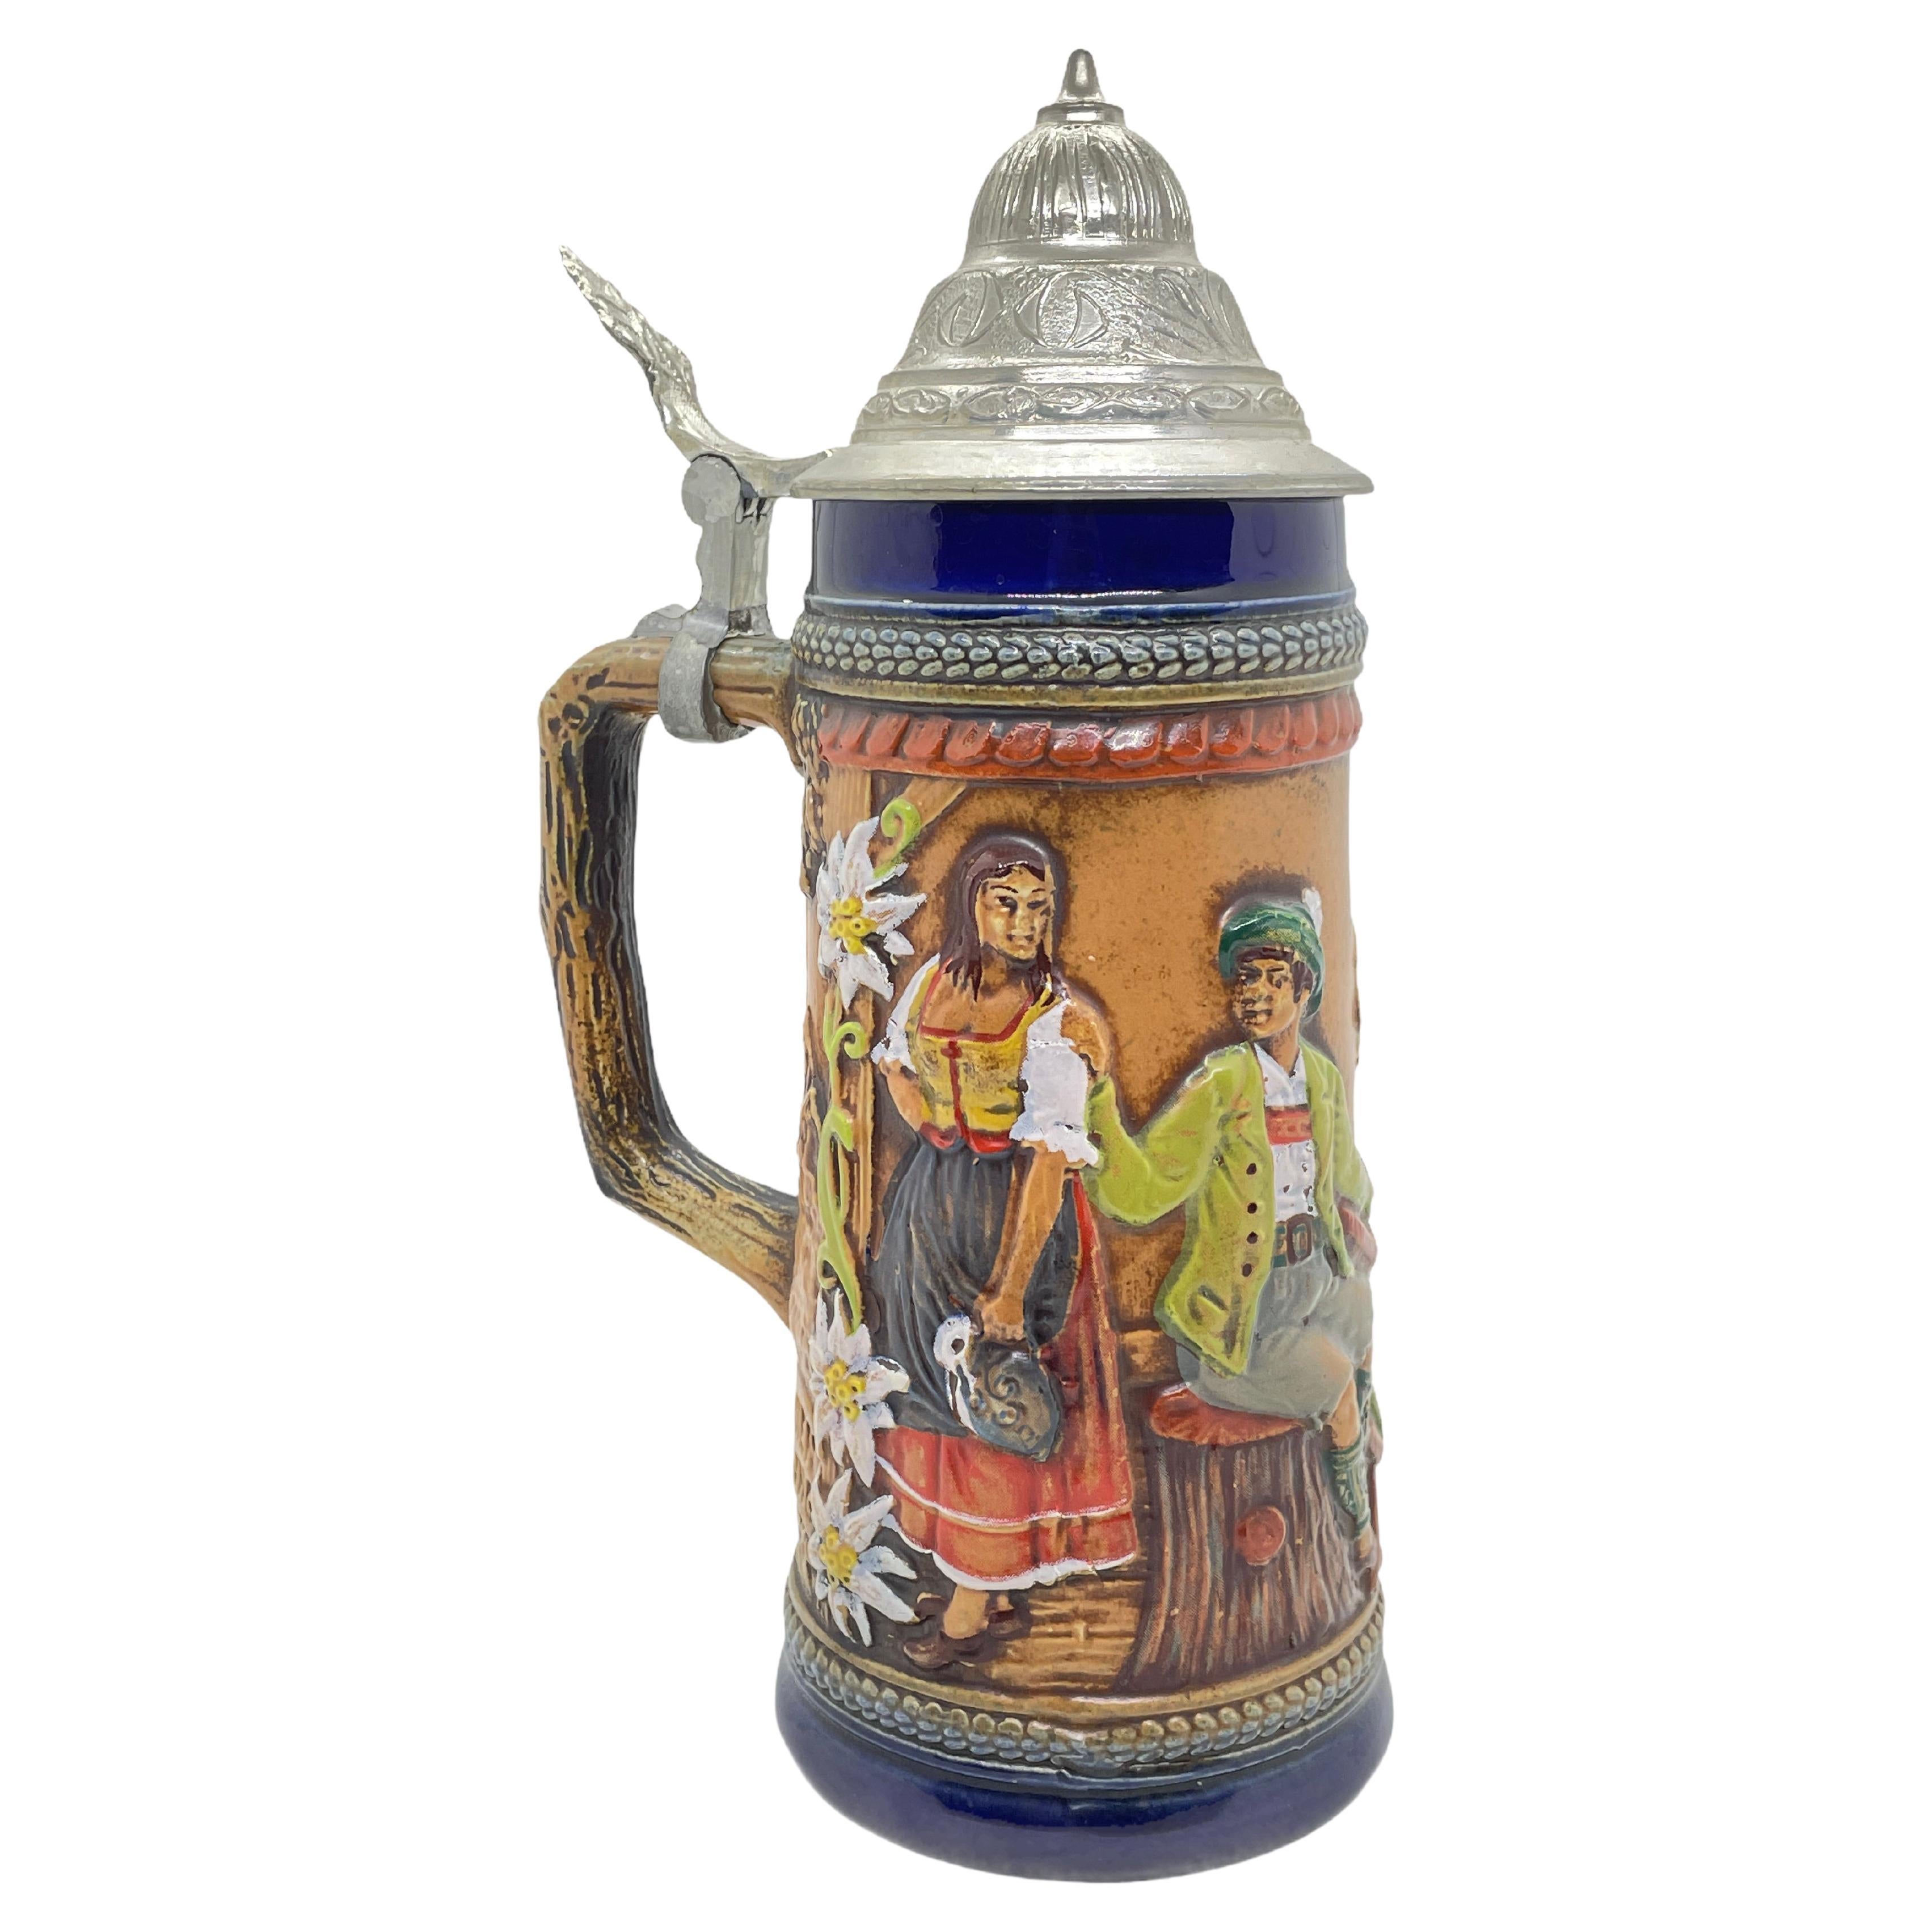 Vintage Ceramic Beer Stein Lidded with Pewter Lid by Gerz, 1960s